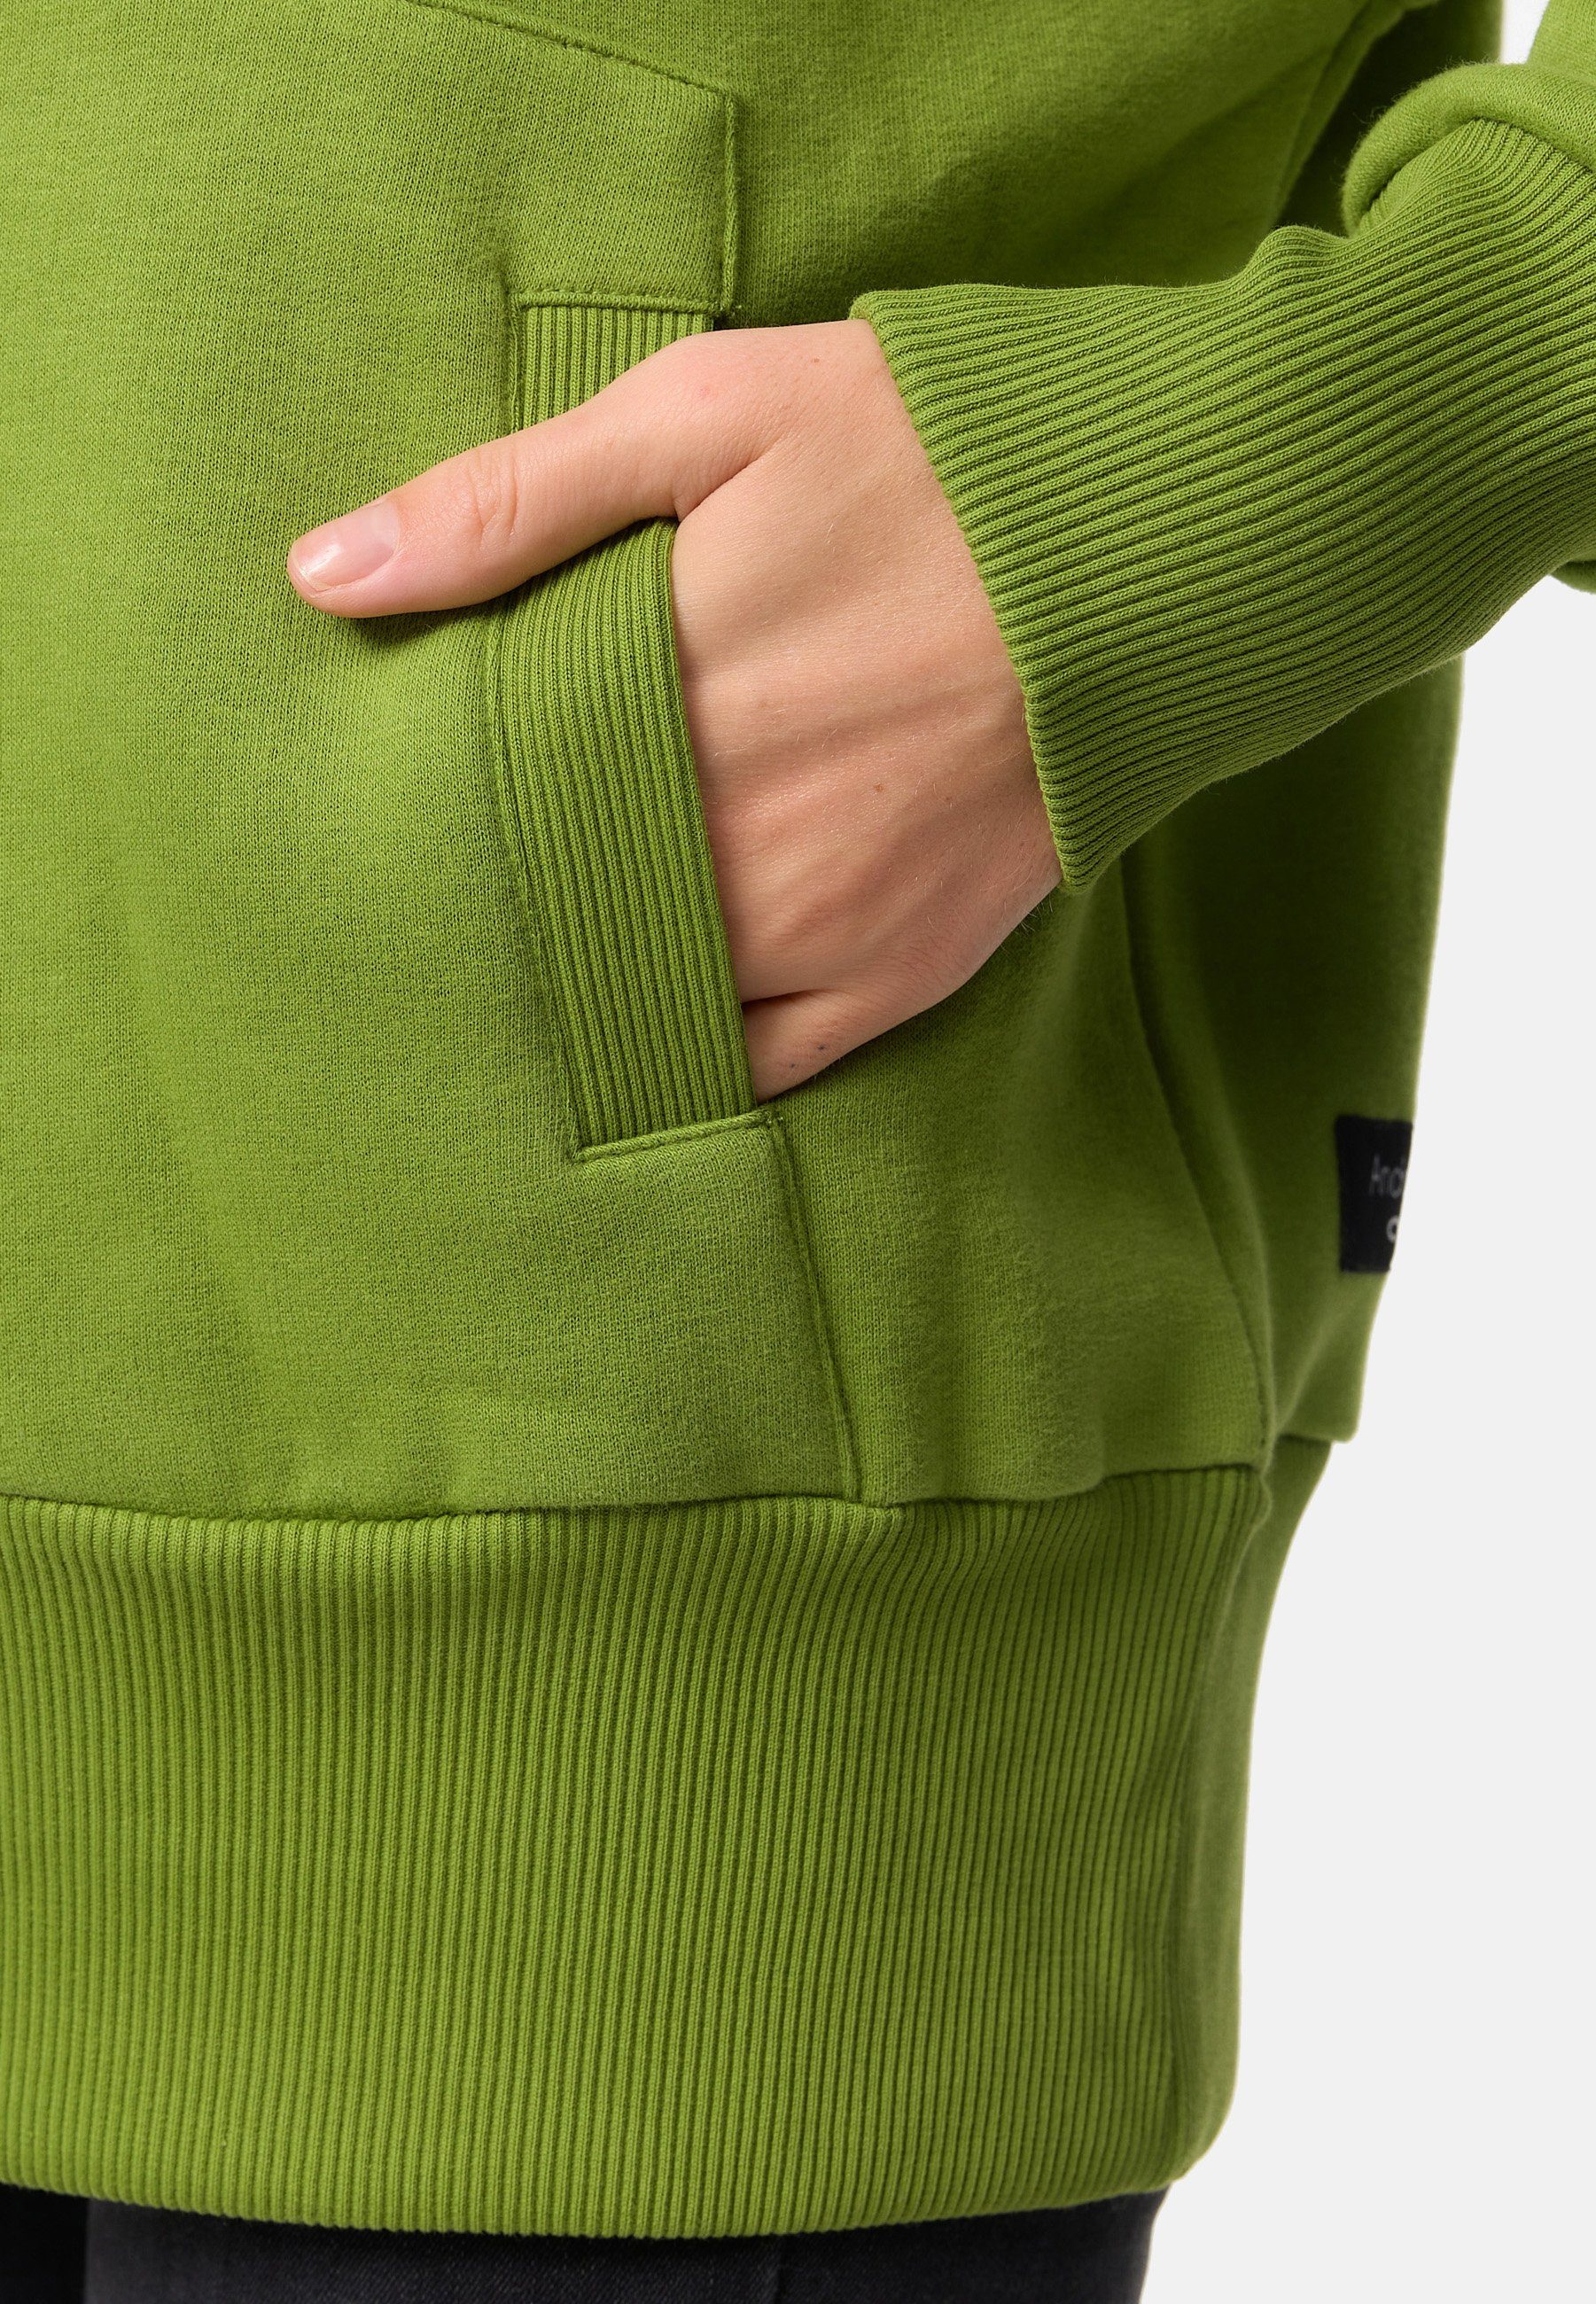 Decay Kapuzensweatshirt mit dezentem Frontprint olivgrün-grün